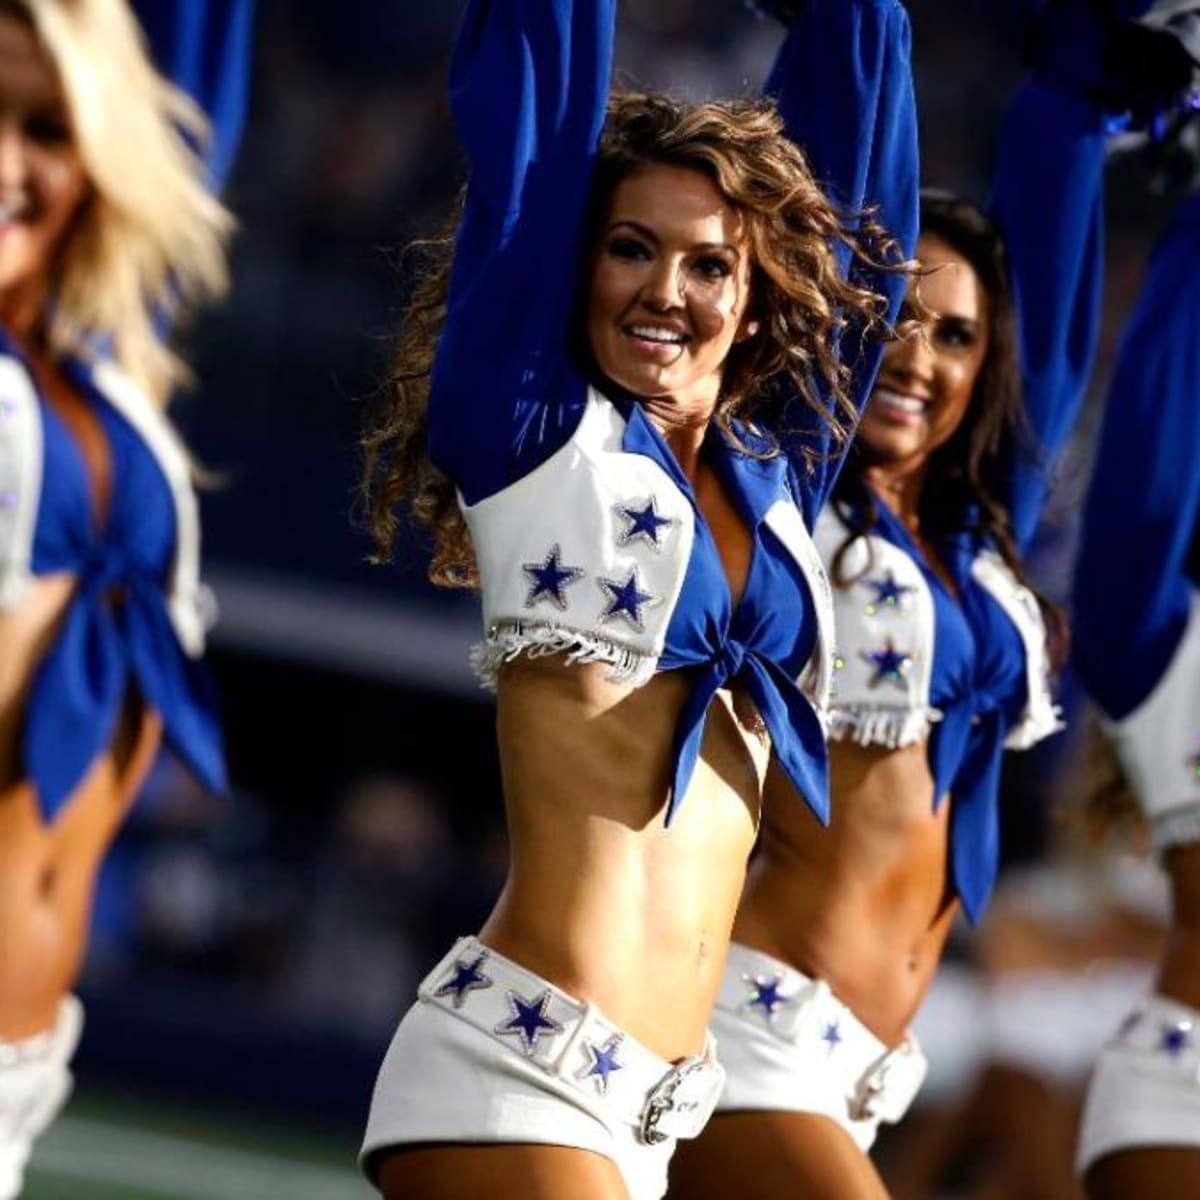 Ex-Dallas Cowboys cheerleader sues team for unequal pay - Sports